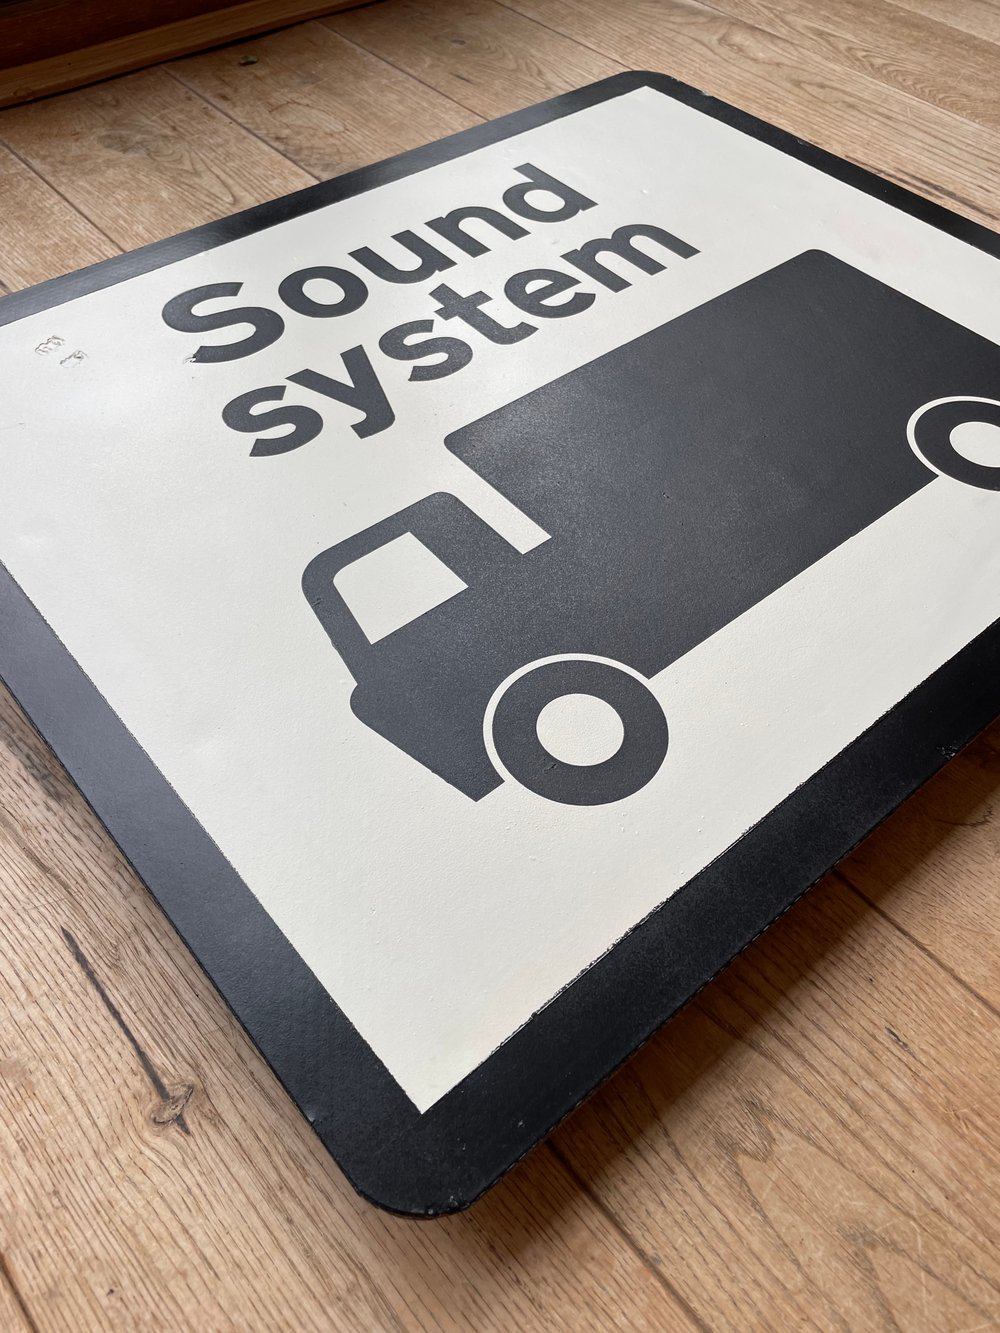 Image of SOUND SYSTEM METAL ROAD SIGN